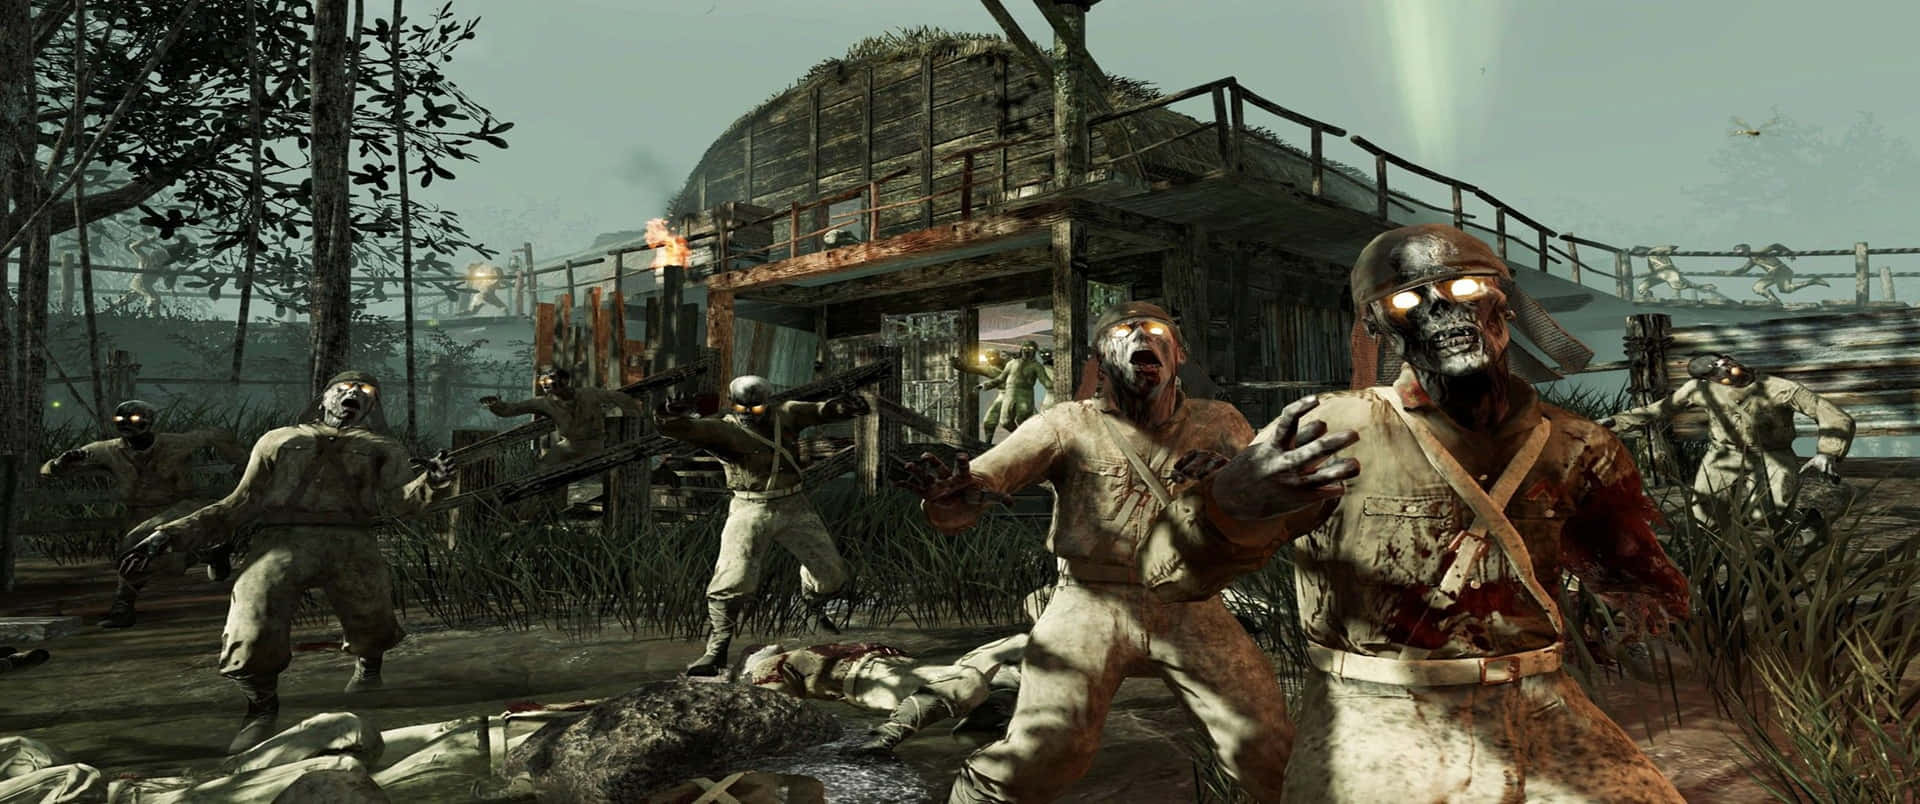 Spøgelsestemning 3440x1440p Call Of Duty Black Ops Cold War Baggrund.